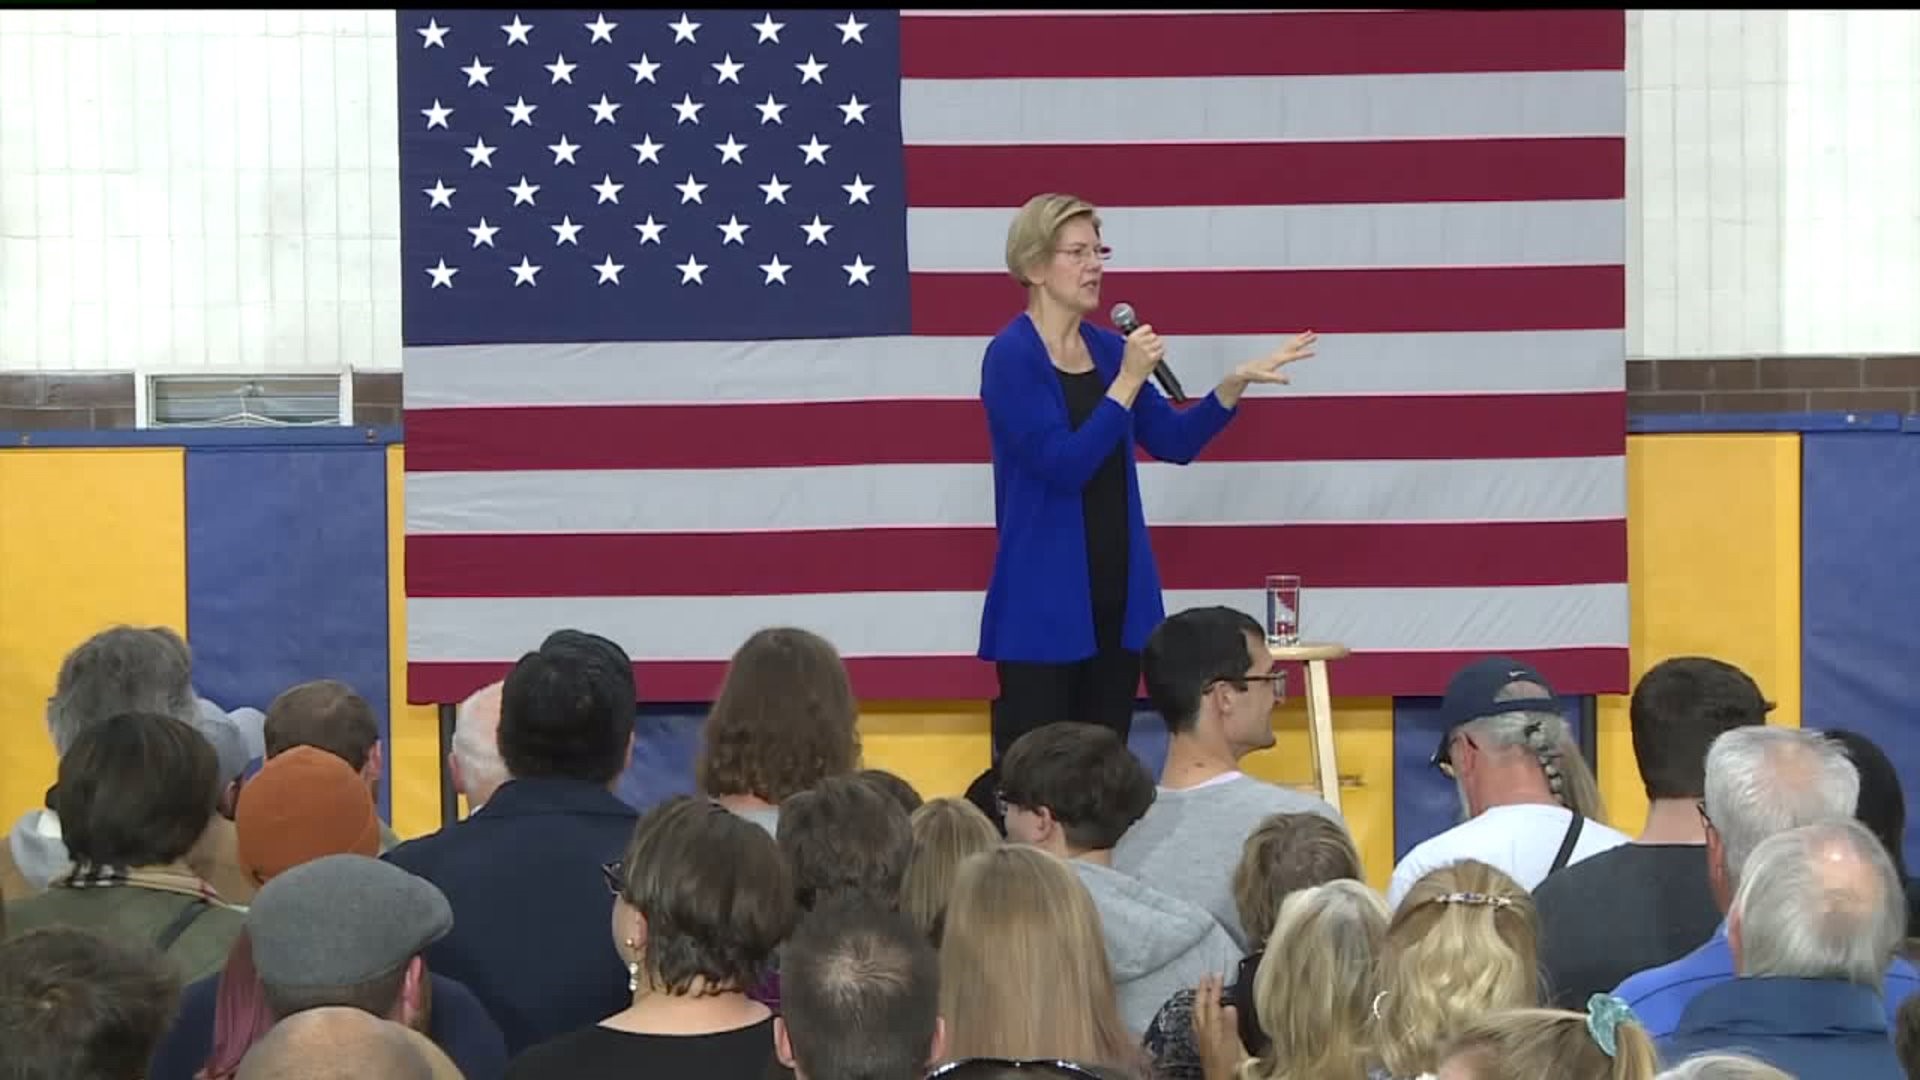 Elizabeth Warren gains in polls, holds town hall in Davenport